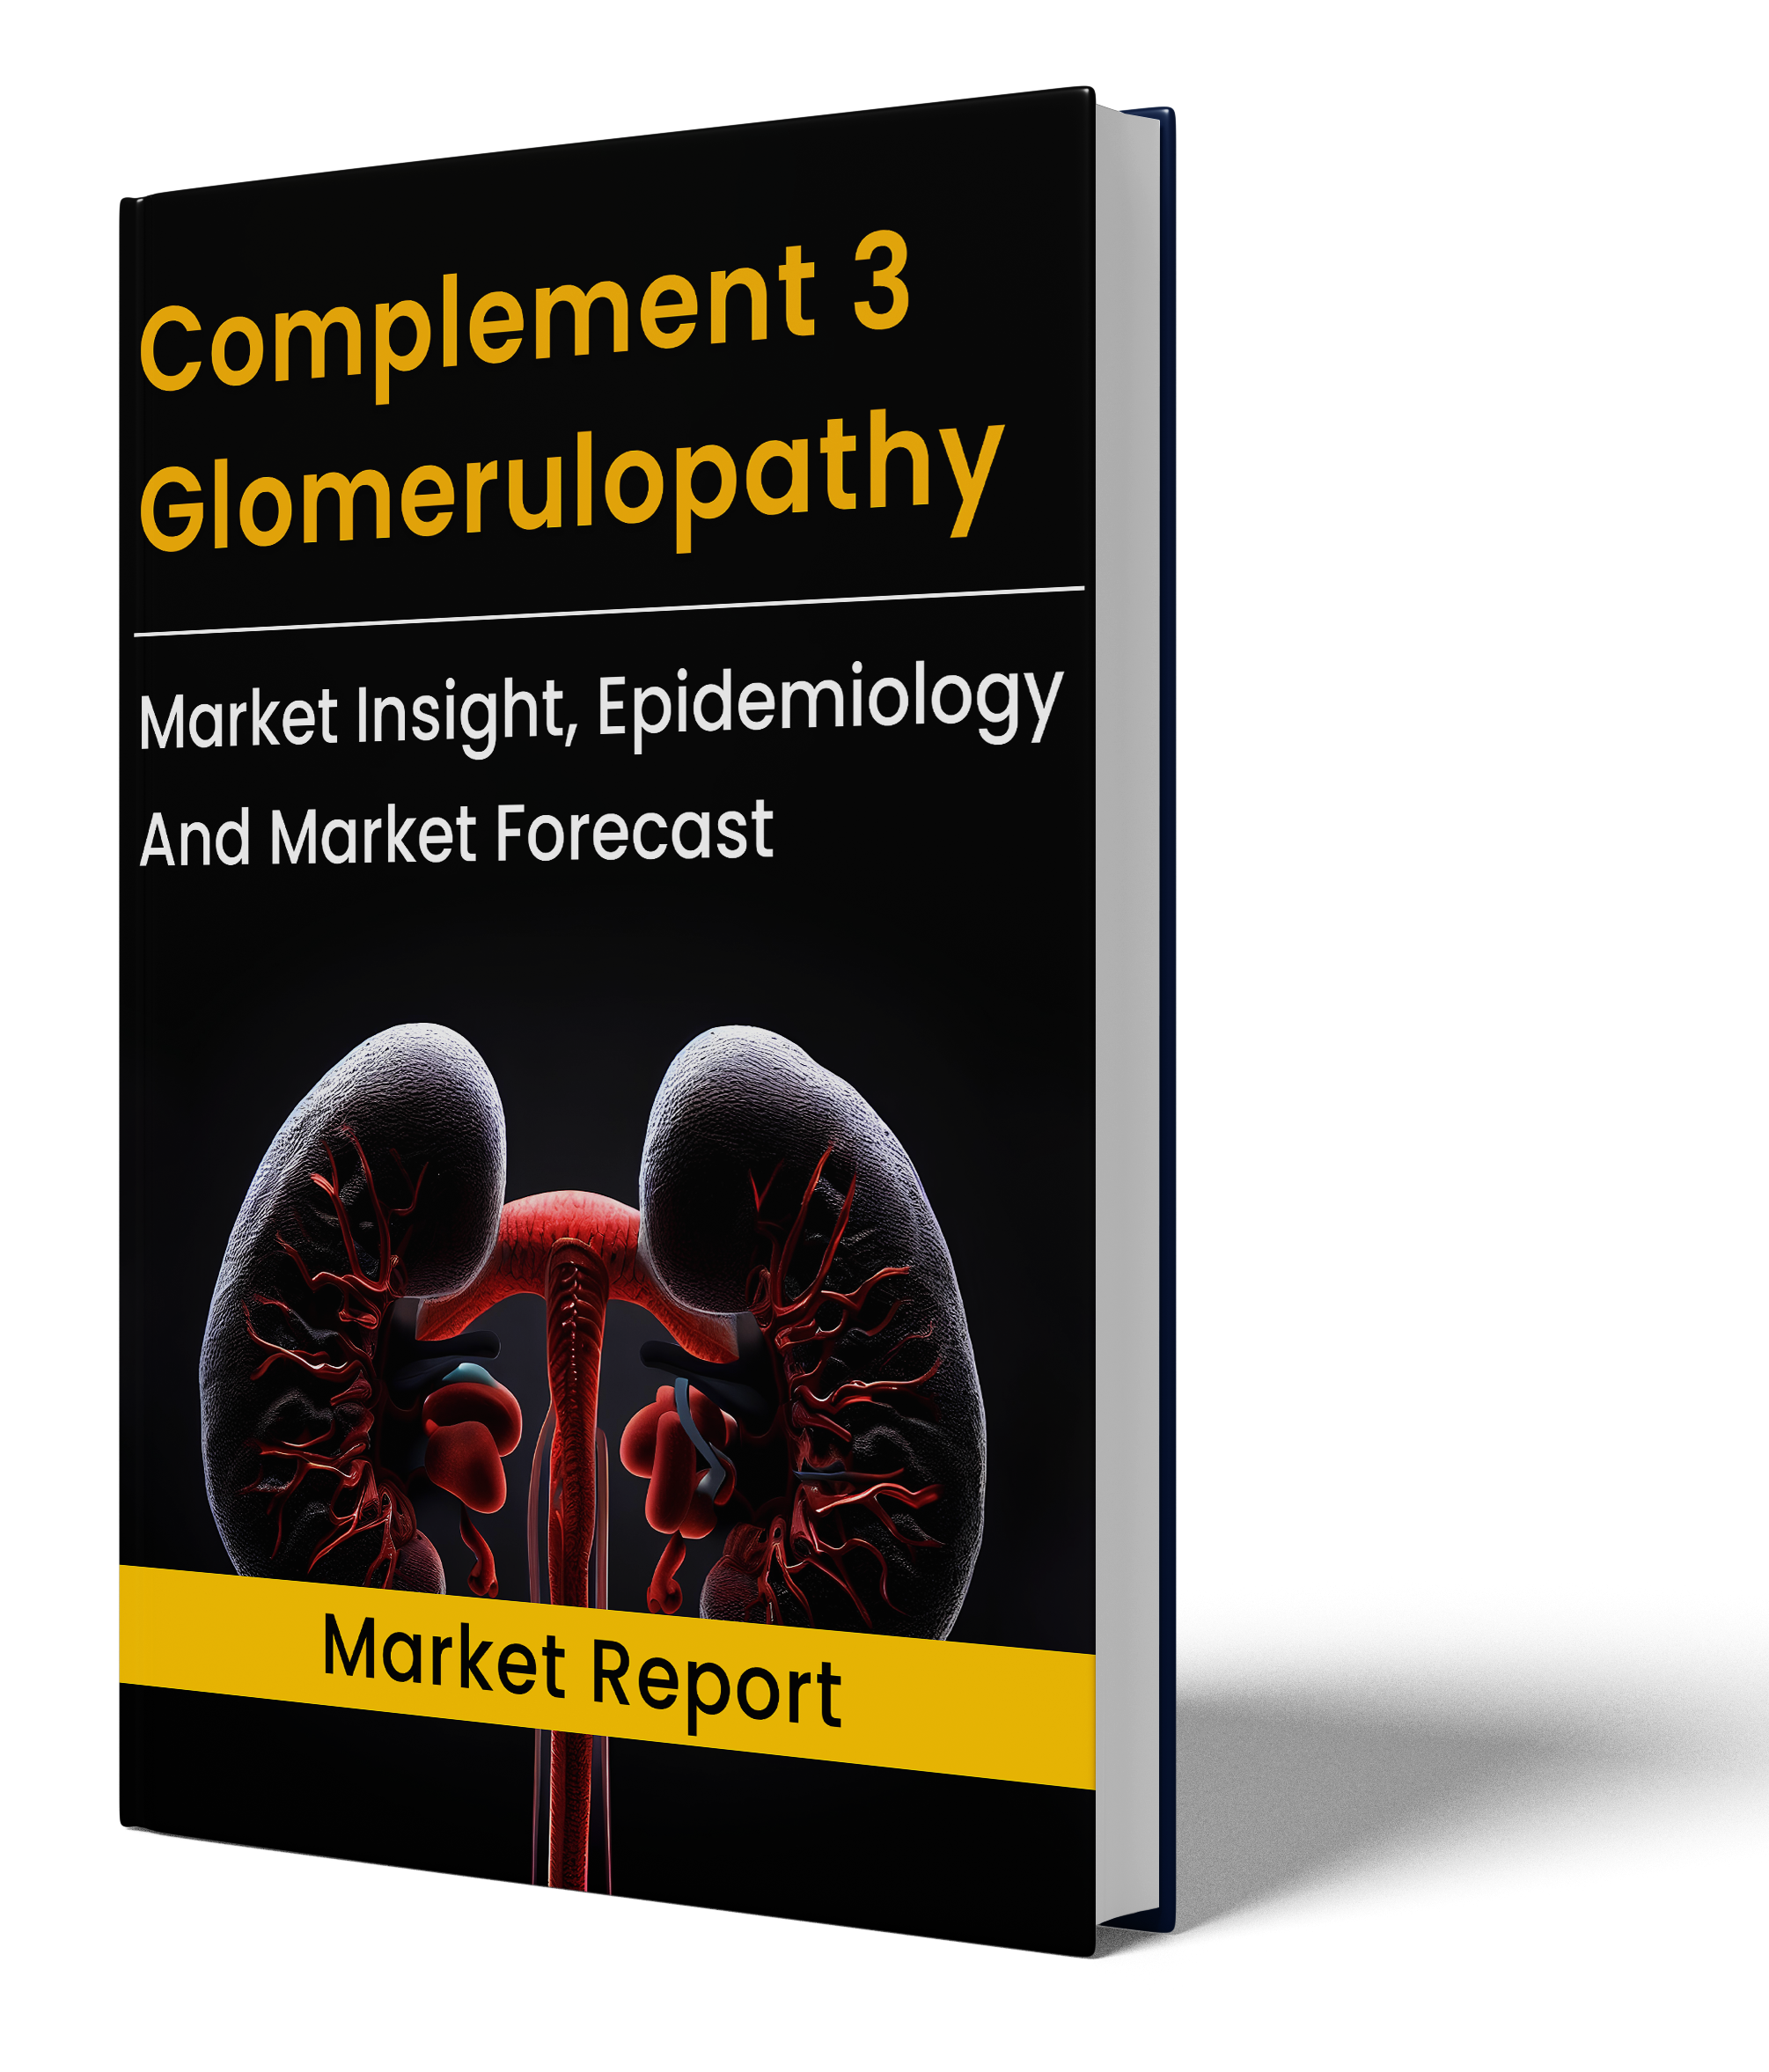 Complement 3 Glomerulopathy market report